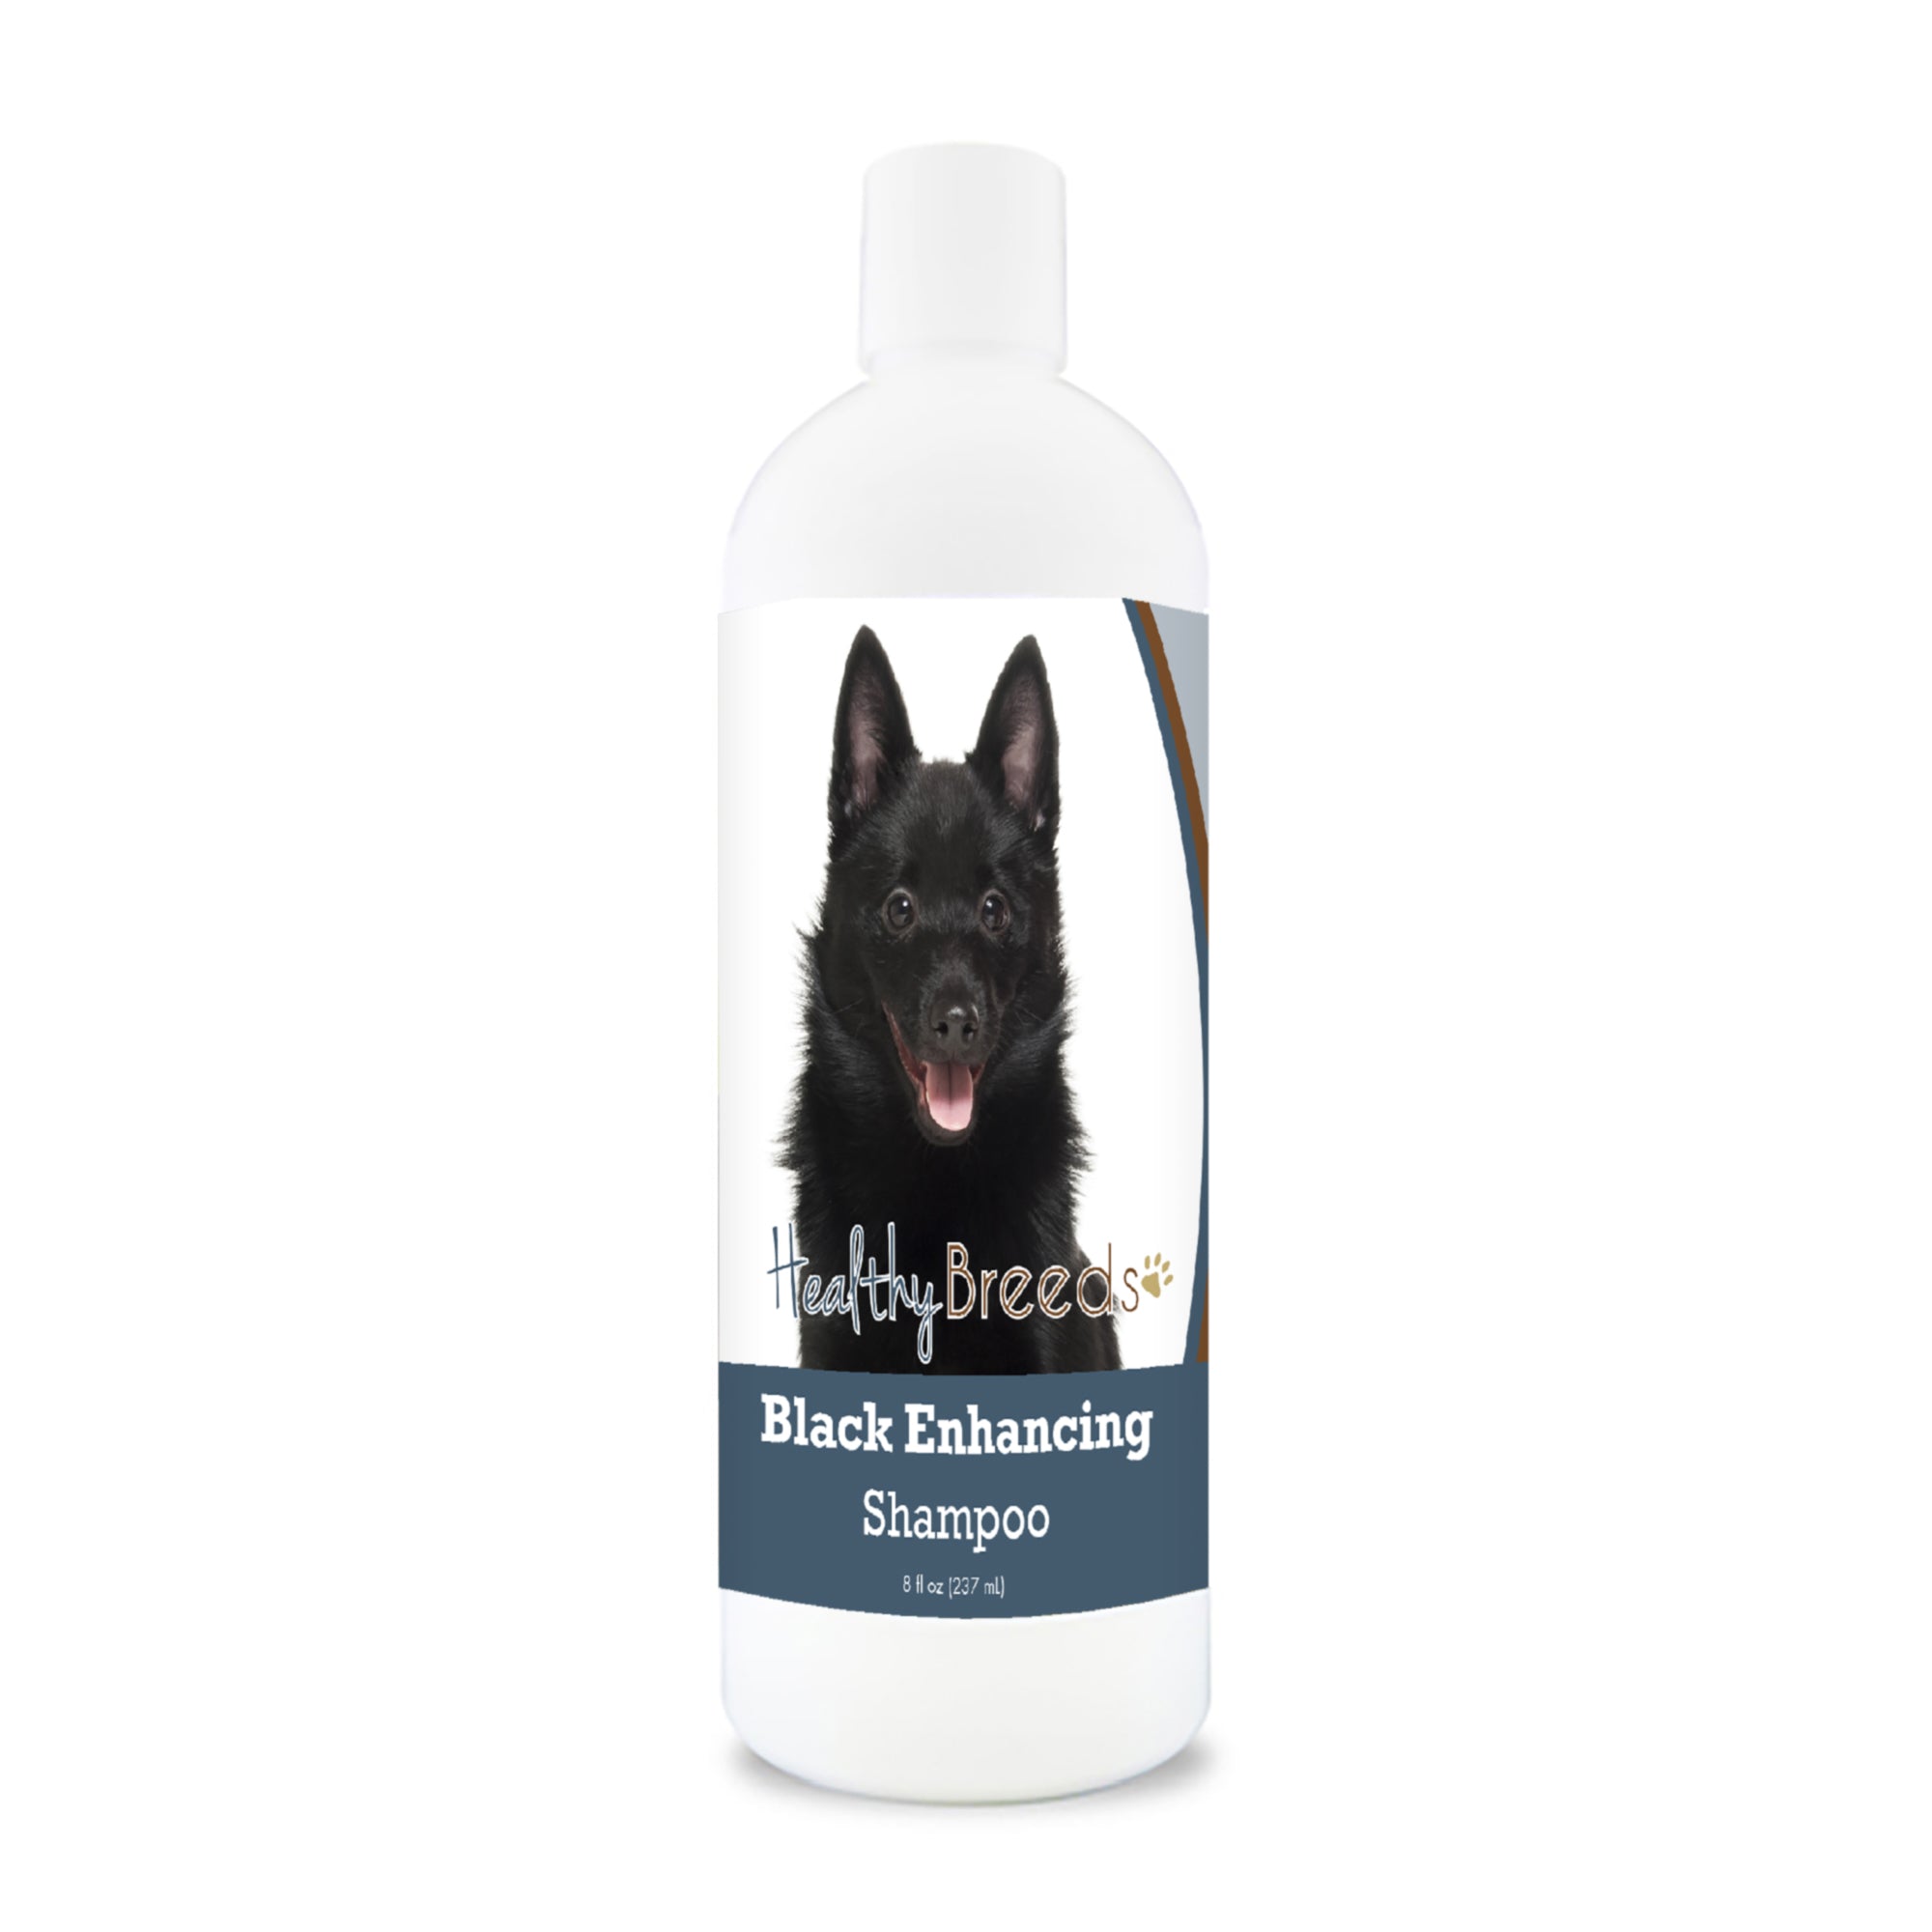 Schipperke Black Enhancing Shampoo 8 oz